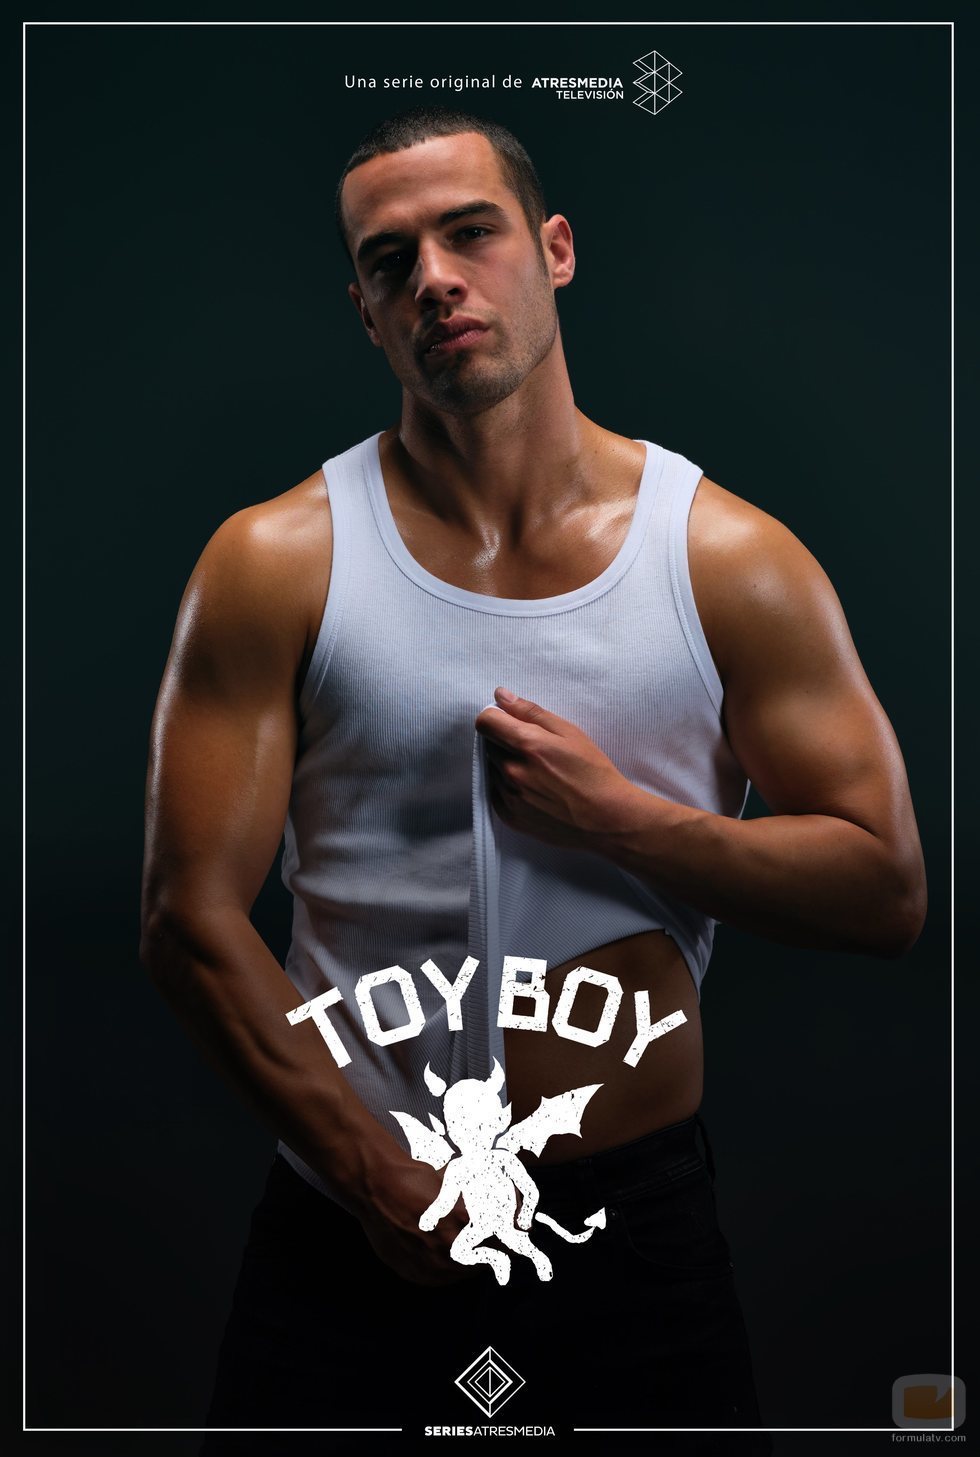 Hugo (Jesús Mosquera), en un póster promocional de 'Toy Boy'